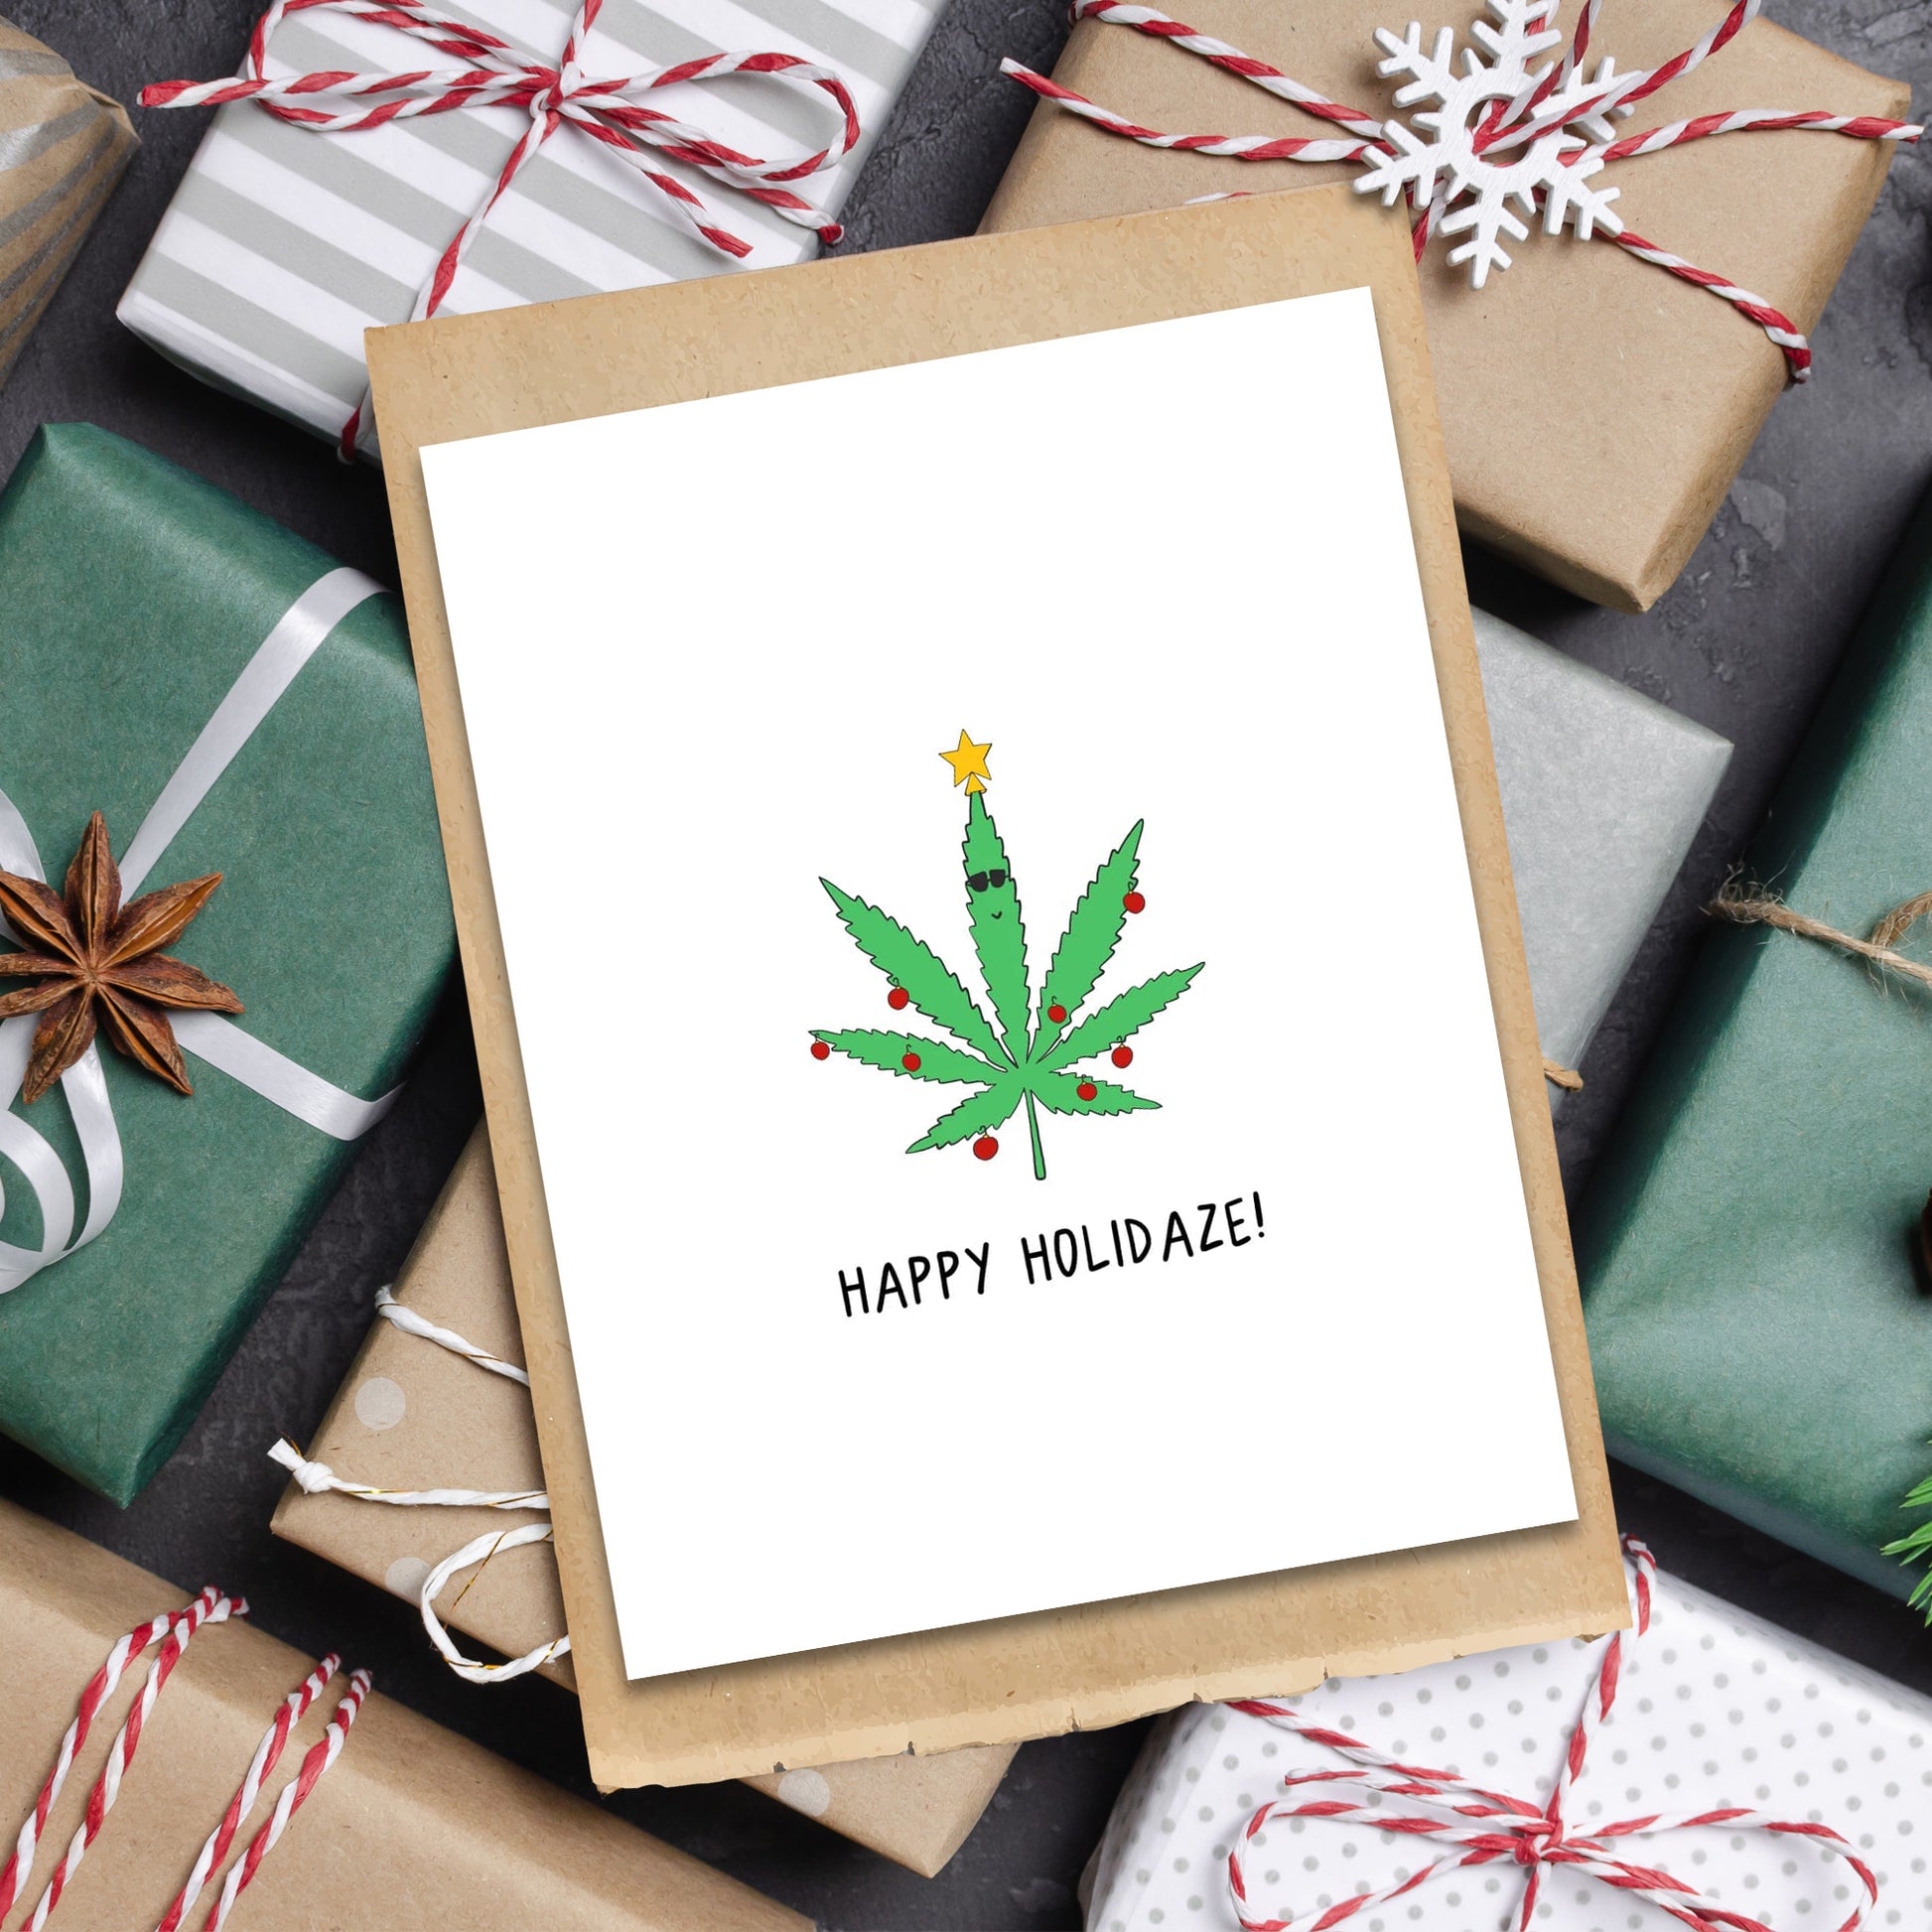 A rockdoodles Holidaze card with a marijuana leaf on it, enclosed in a natural envelope.